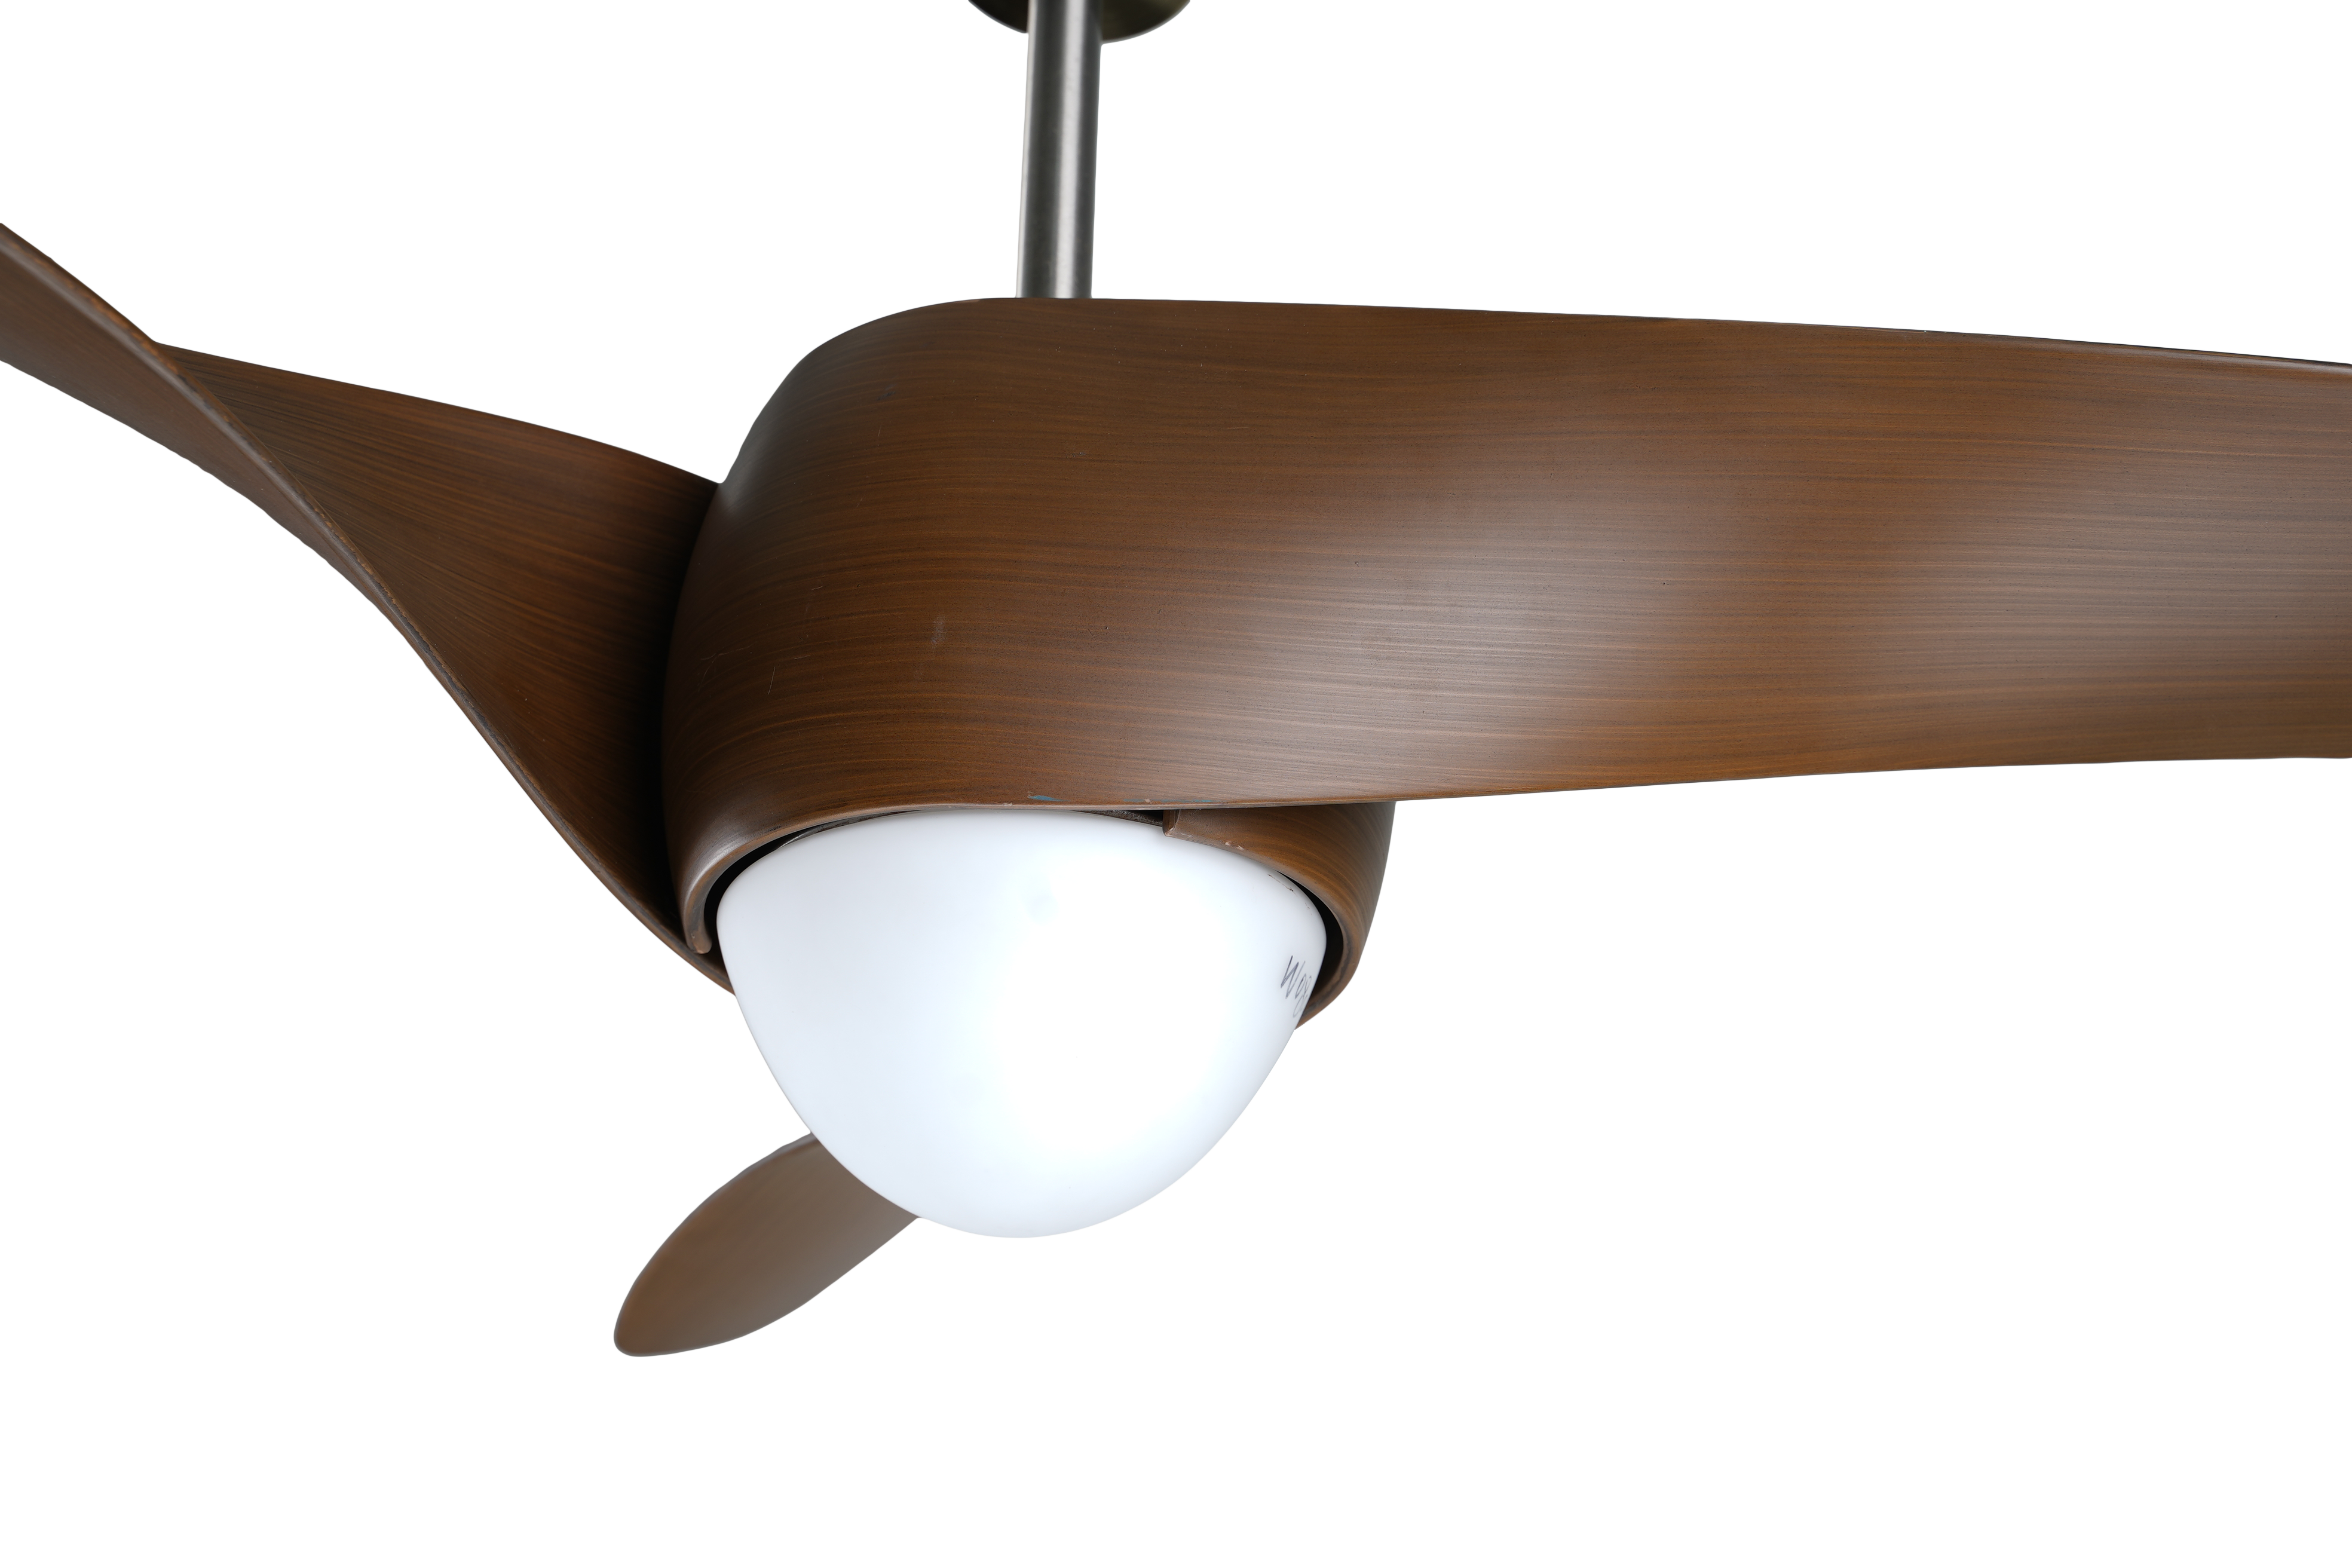 Modern Design Wooden Ceiling Fan With Led Light